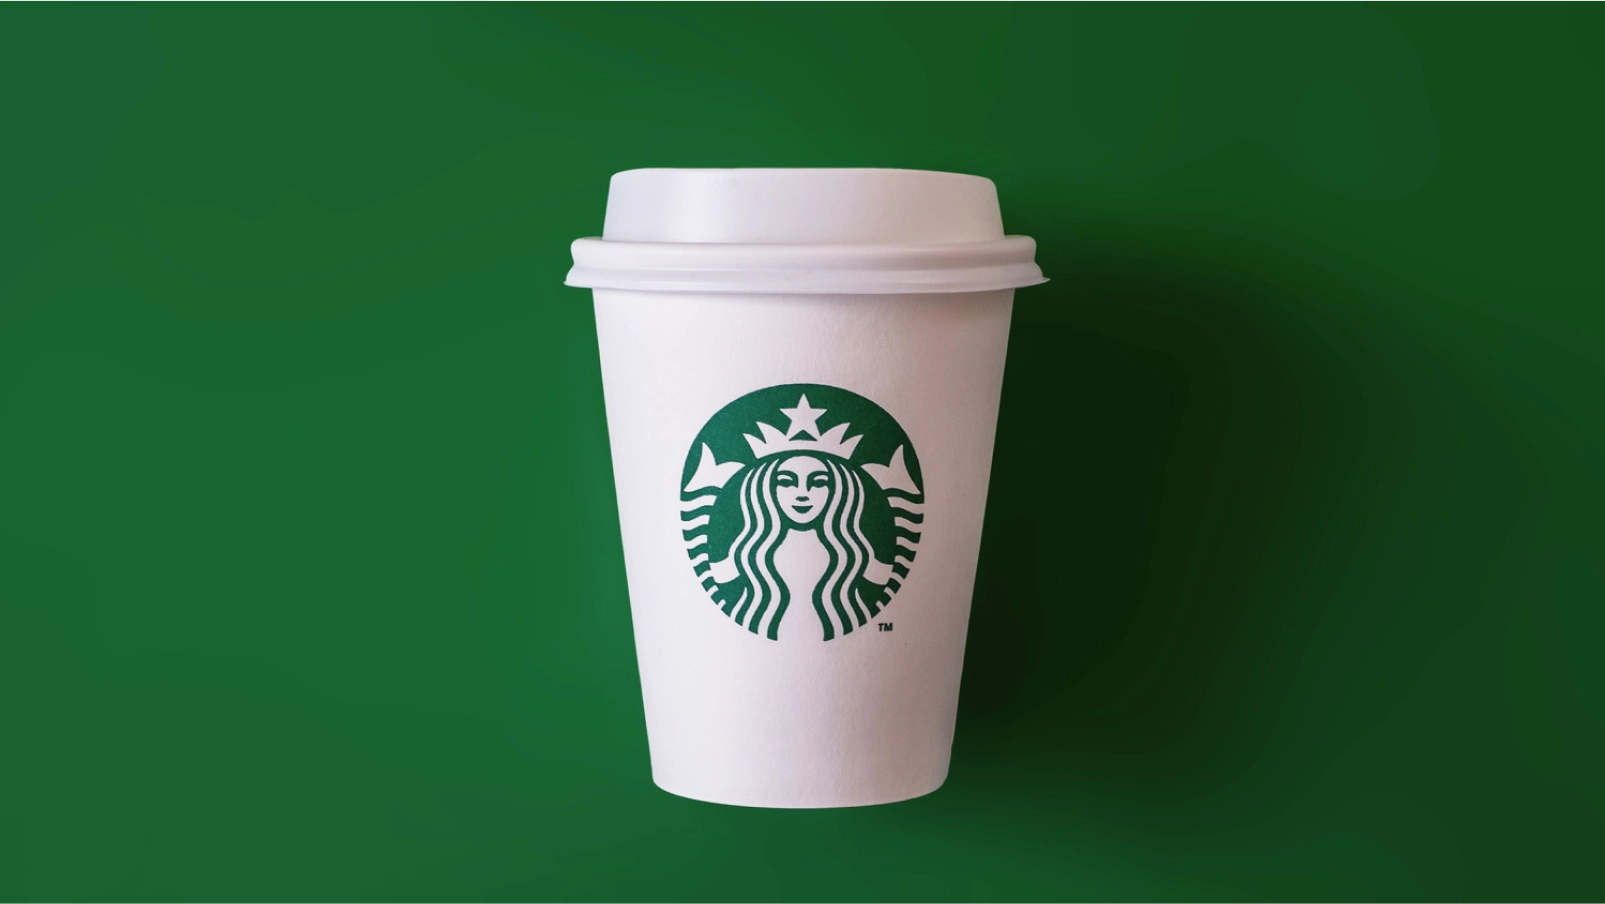 starbucks coffee cup